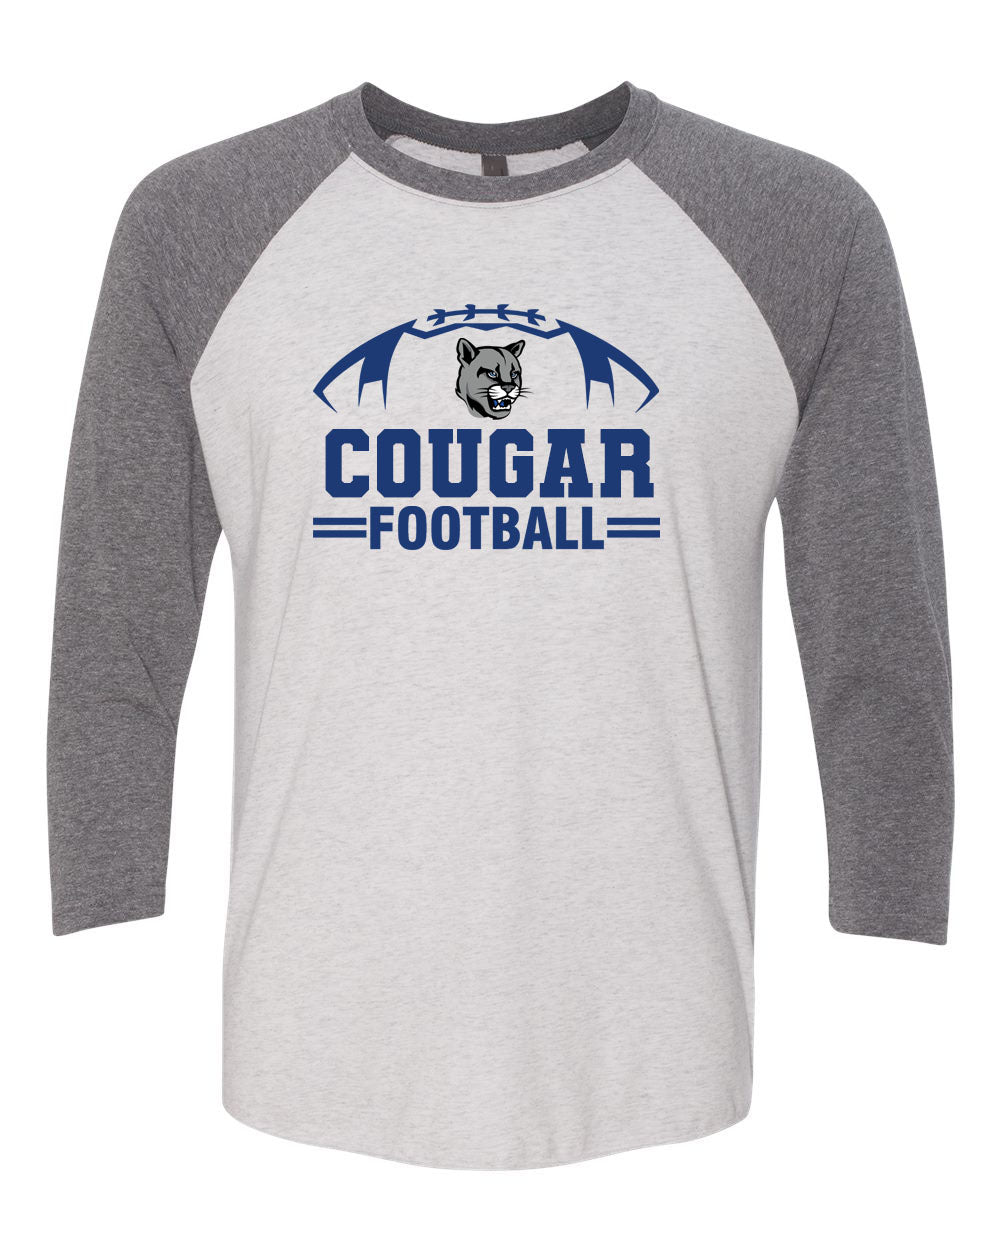 Cougar Football raglan shirt